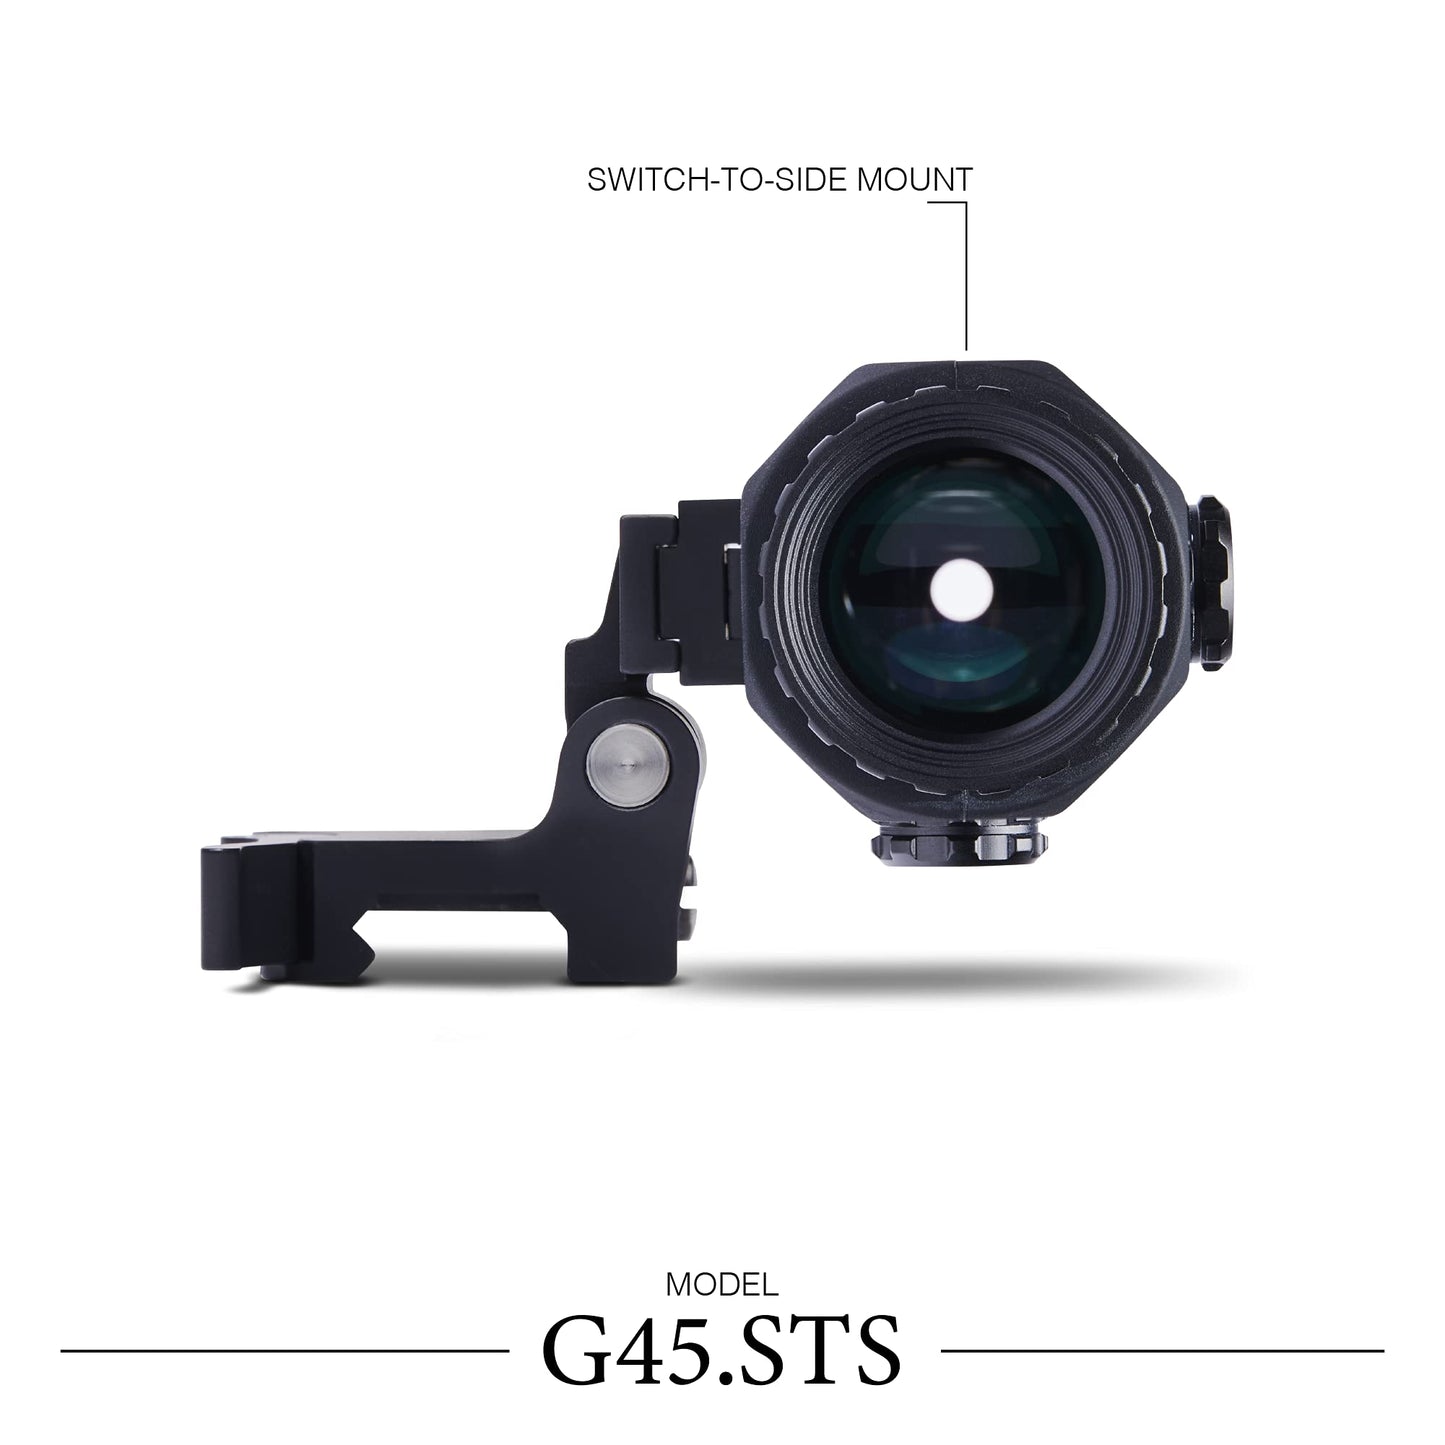 EOTECH Magnifier - G45.STS